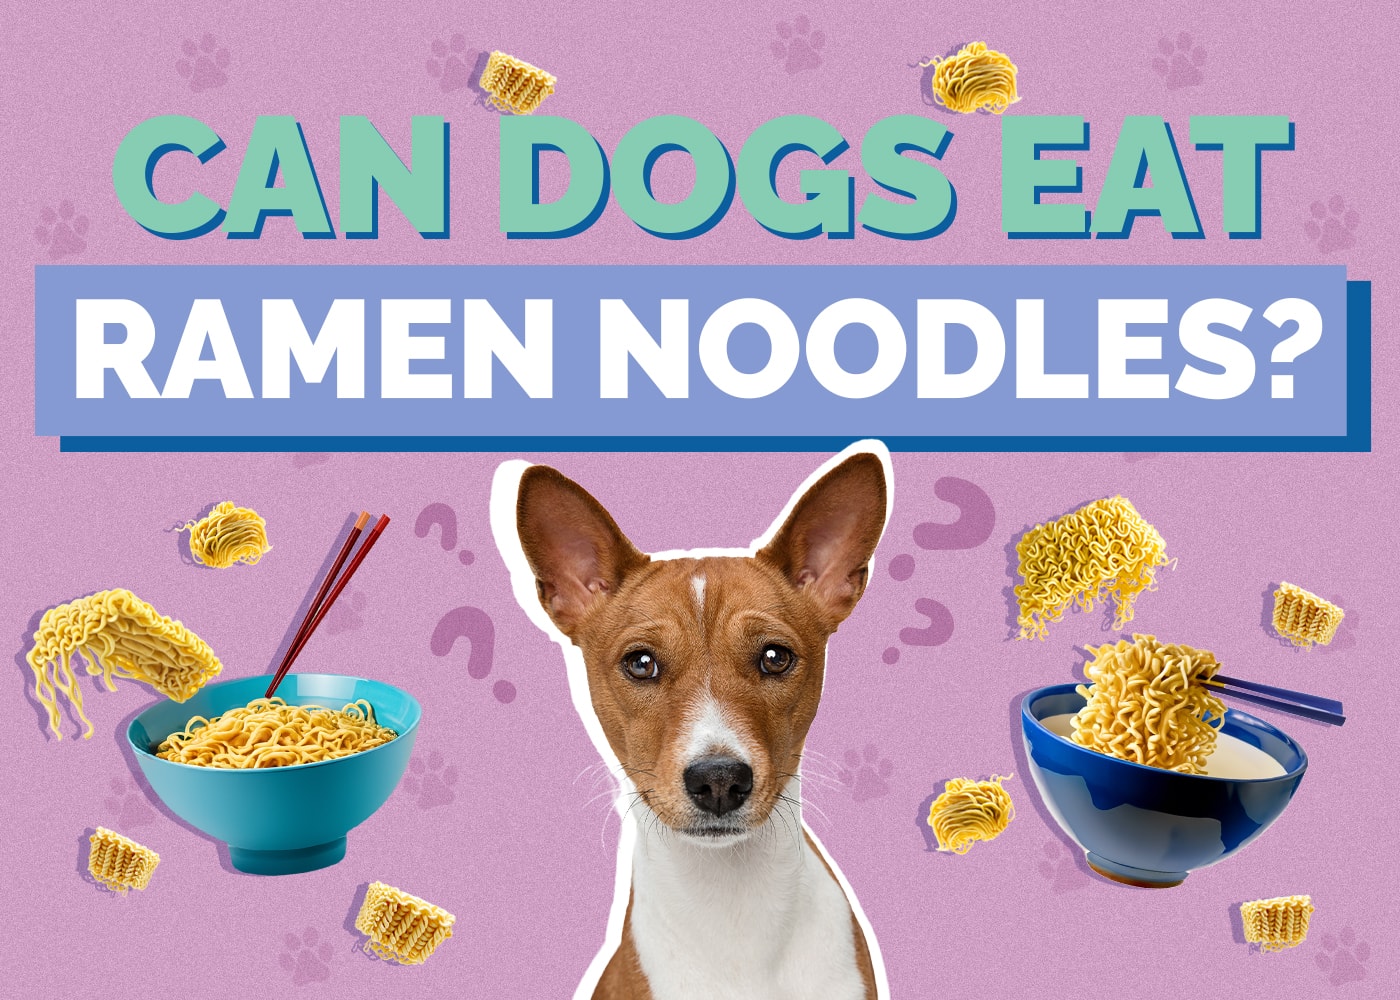 Can Dogs Eat Ramen Noodles